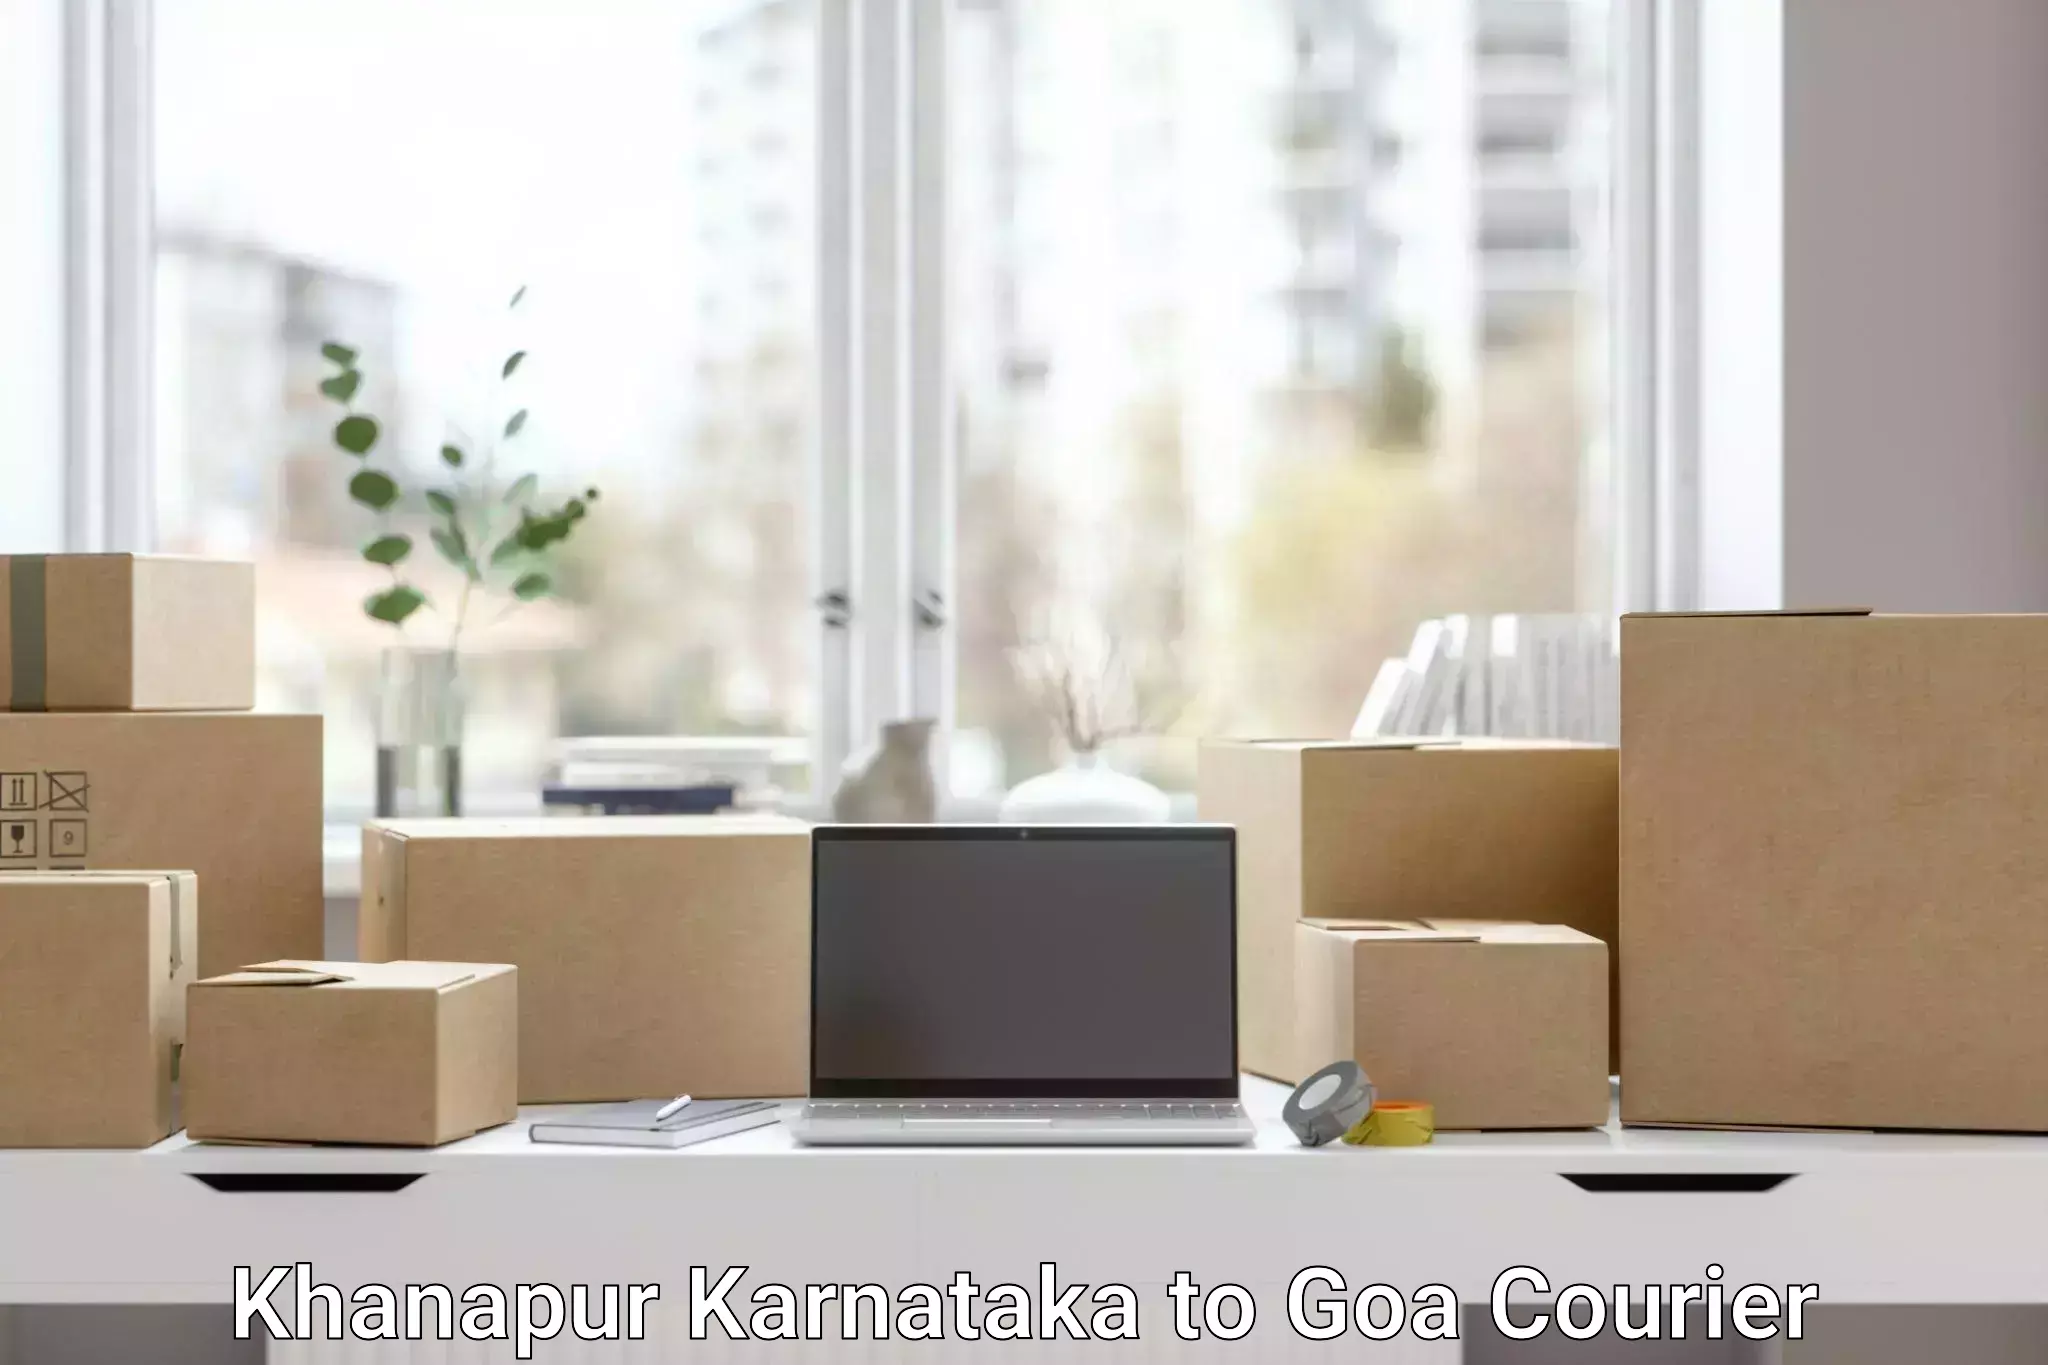 International courier networks Khanapur Karnataka to Panaji